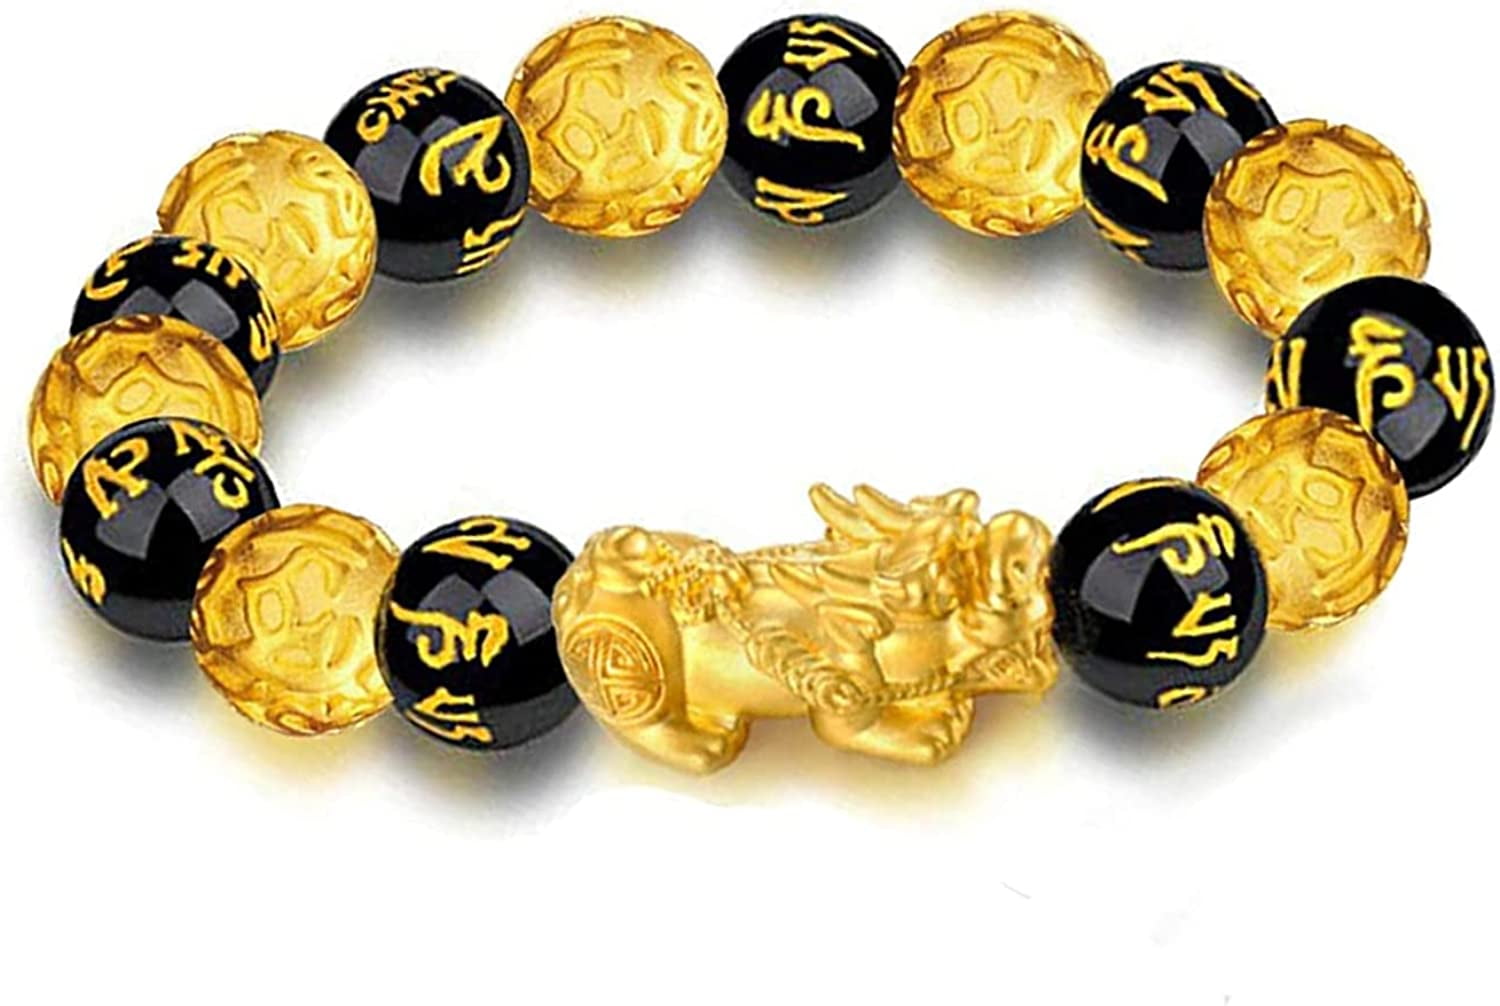 Black Obisdian Beads Stone Bracelets Six Words Feng Shui Bracelet Gold  Color Wealth Pixiu Bracelet Women Men Jewlry277y From Ai829, $23.78 |  DHgate.Com